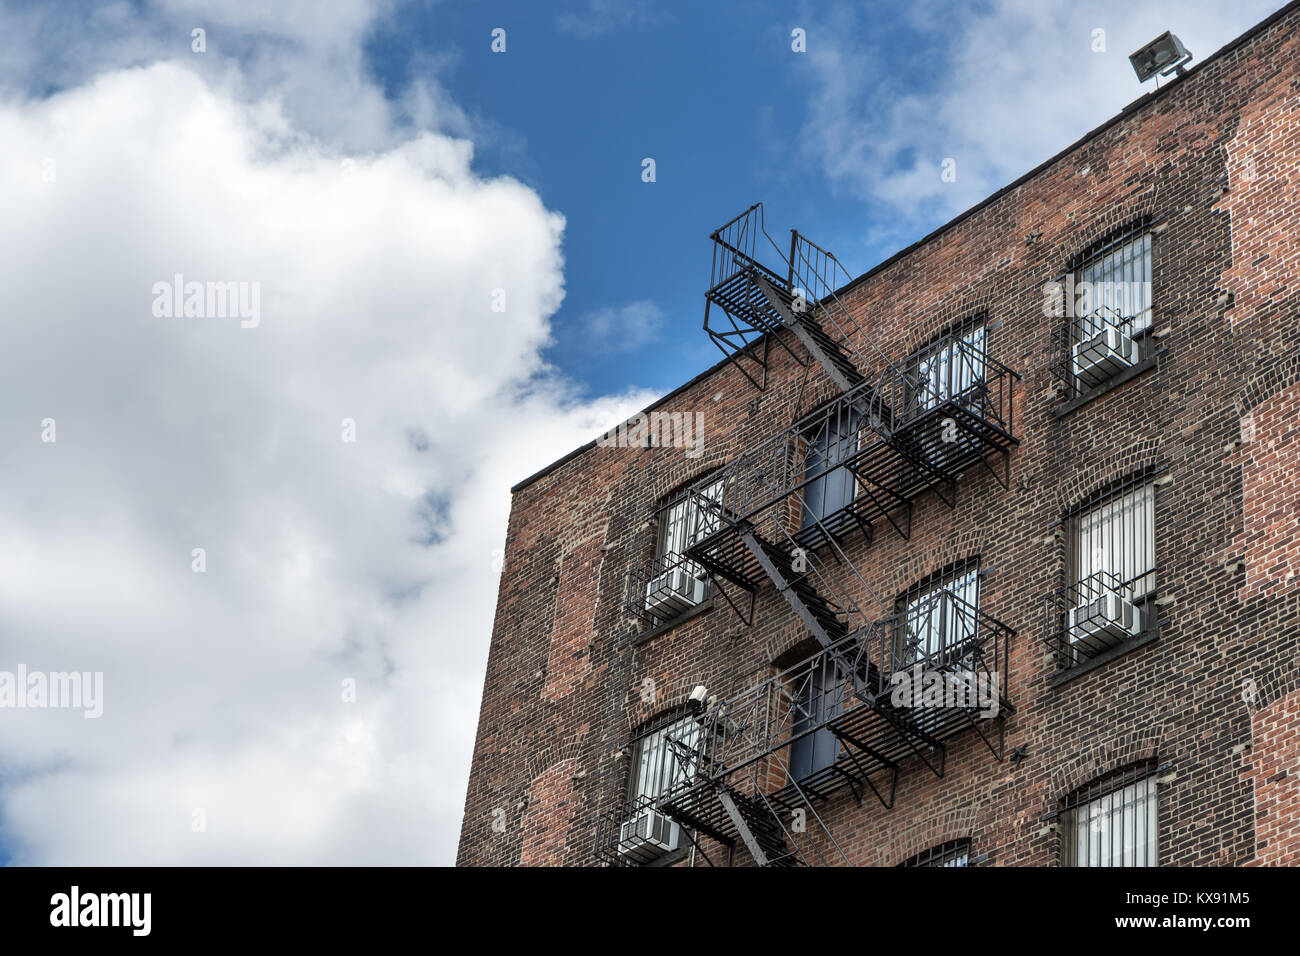 Vieux bâtiment en brique Dumbo, Brooklyn, NY Banque D'Images